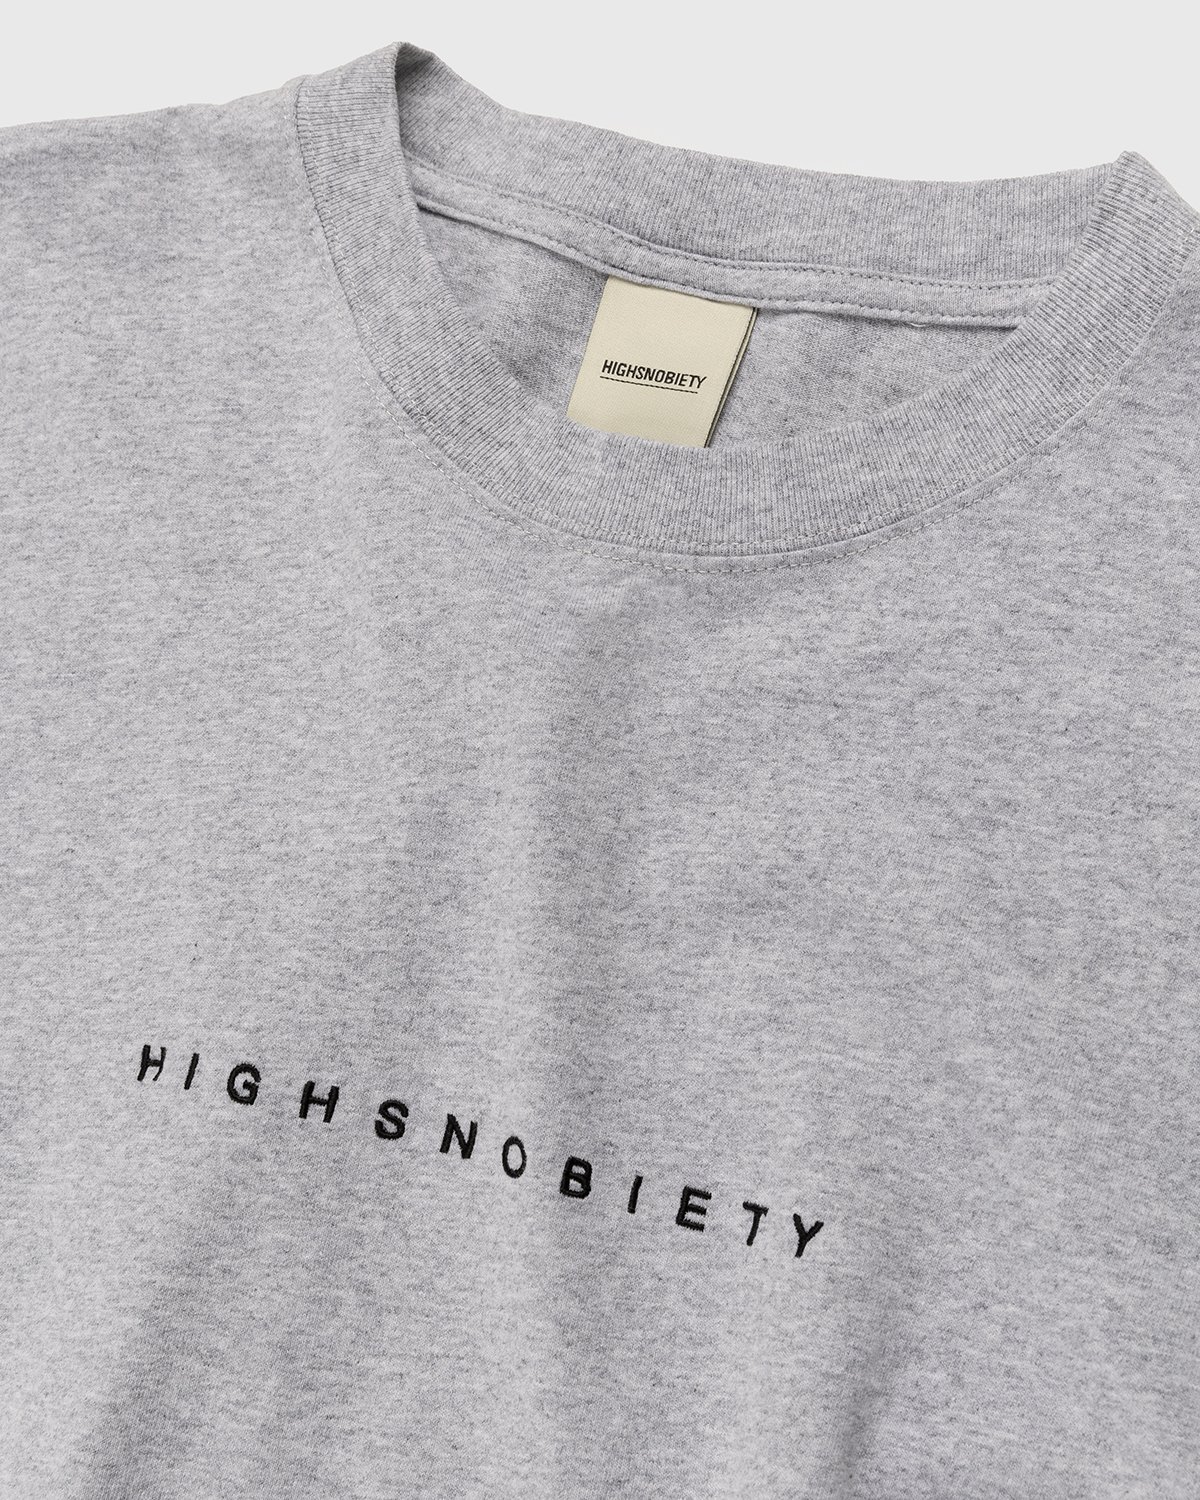 Highsnobiety - Staples T-Shirt Heather Grey - Clothing - Grey - Image 3